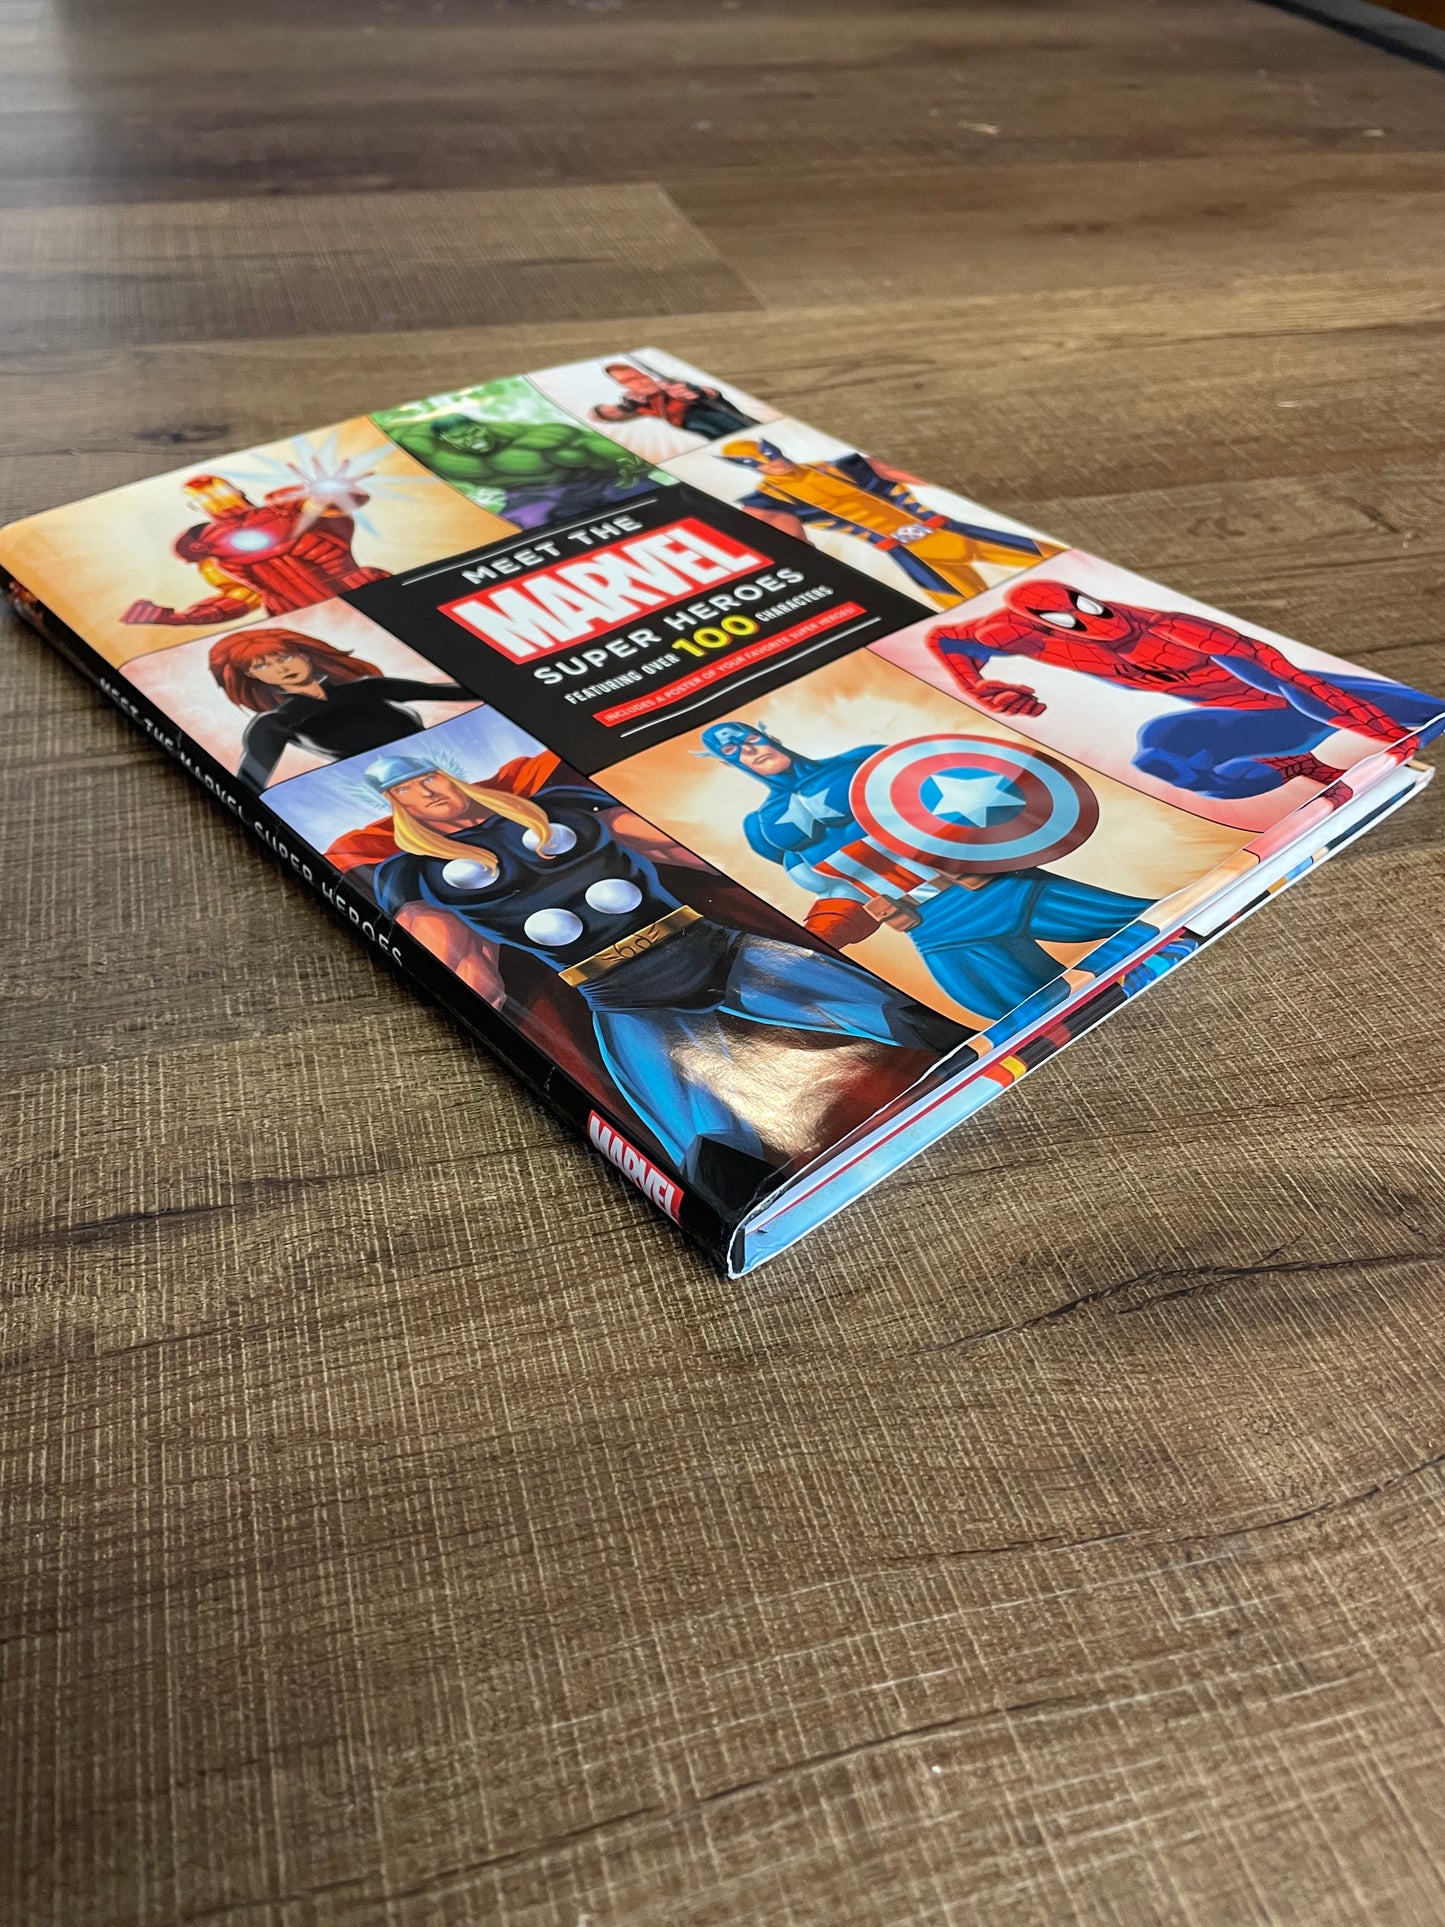 Meet the Marvel Superhero's Hardcover Book